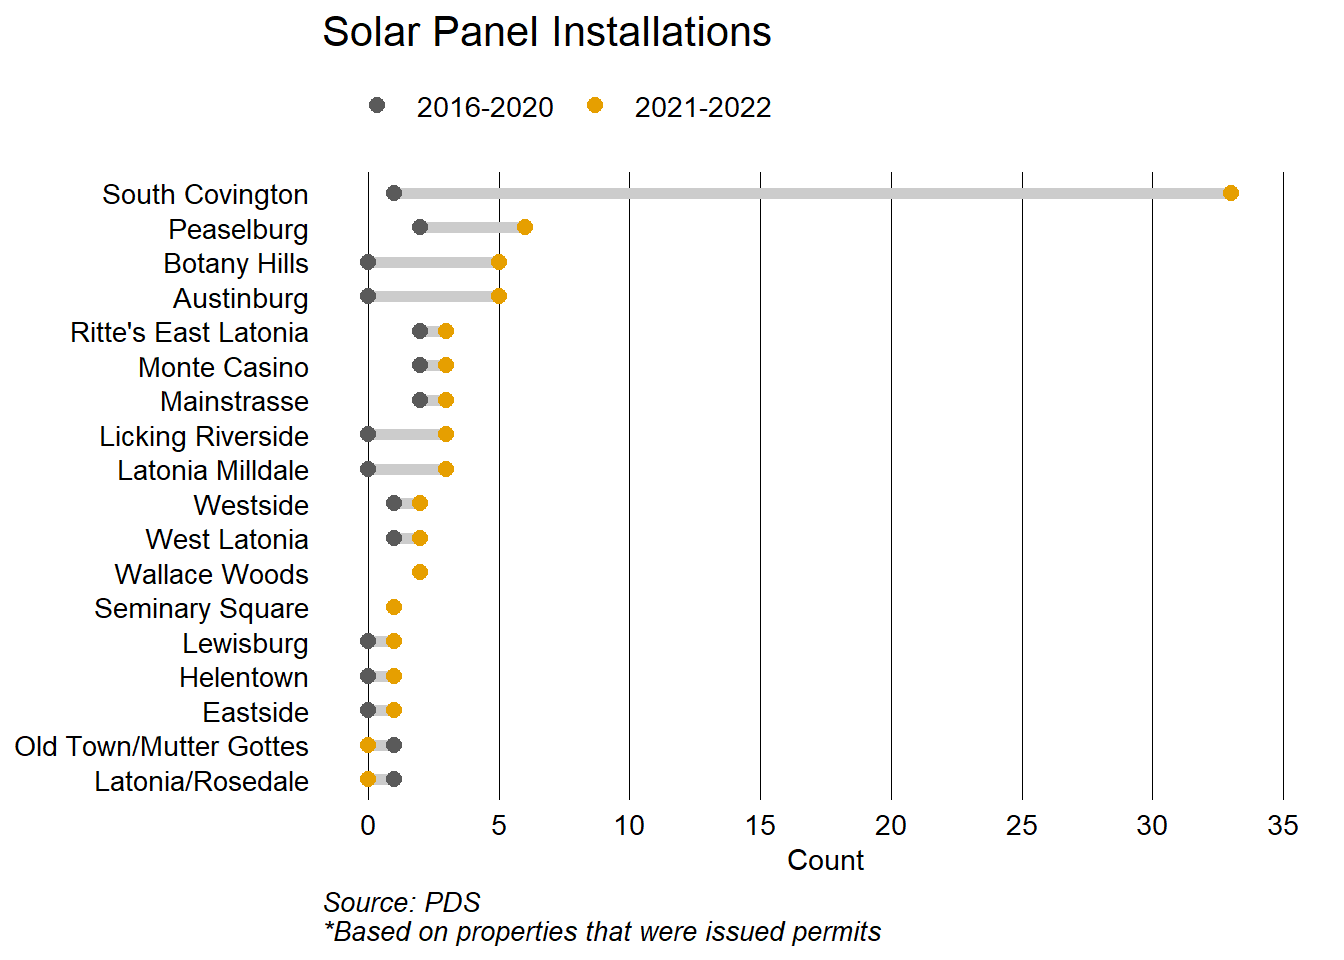 Solar Panel Installations by Neighborhood